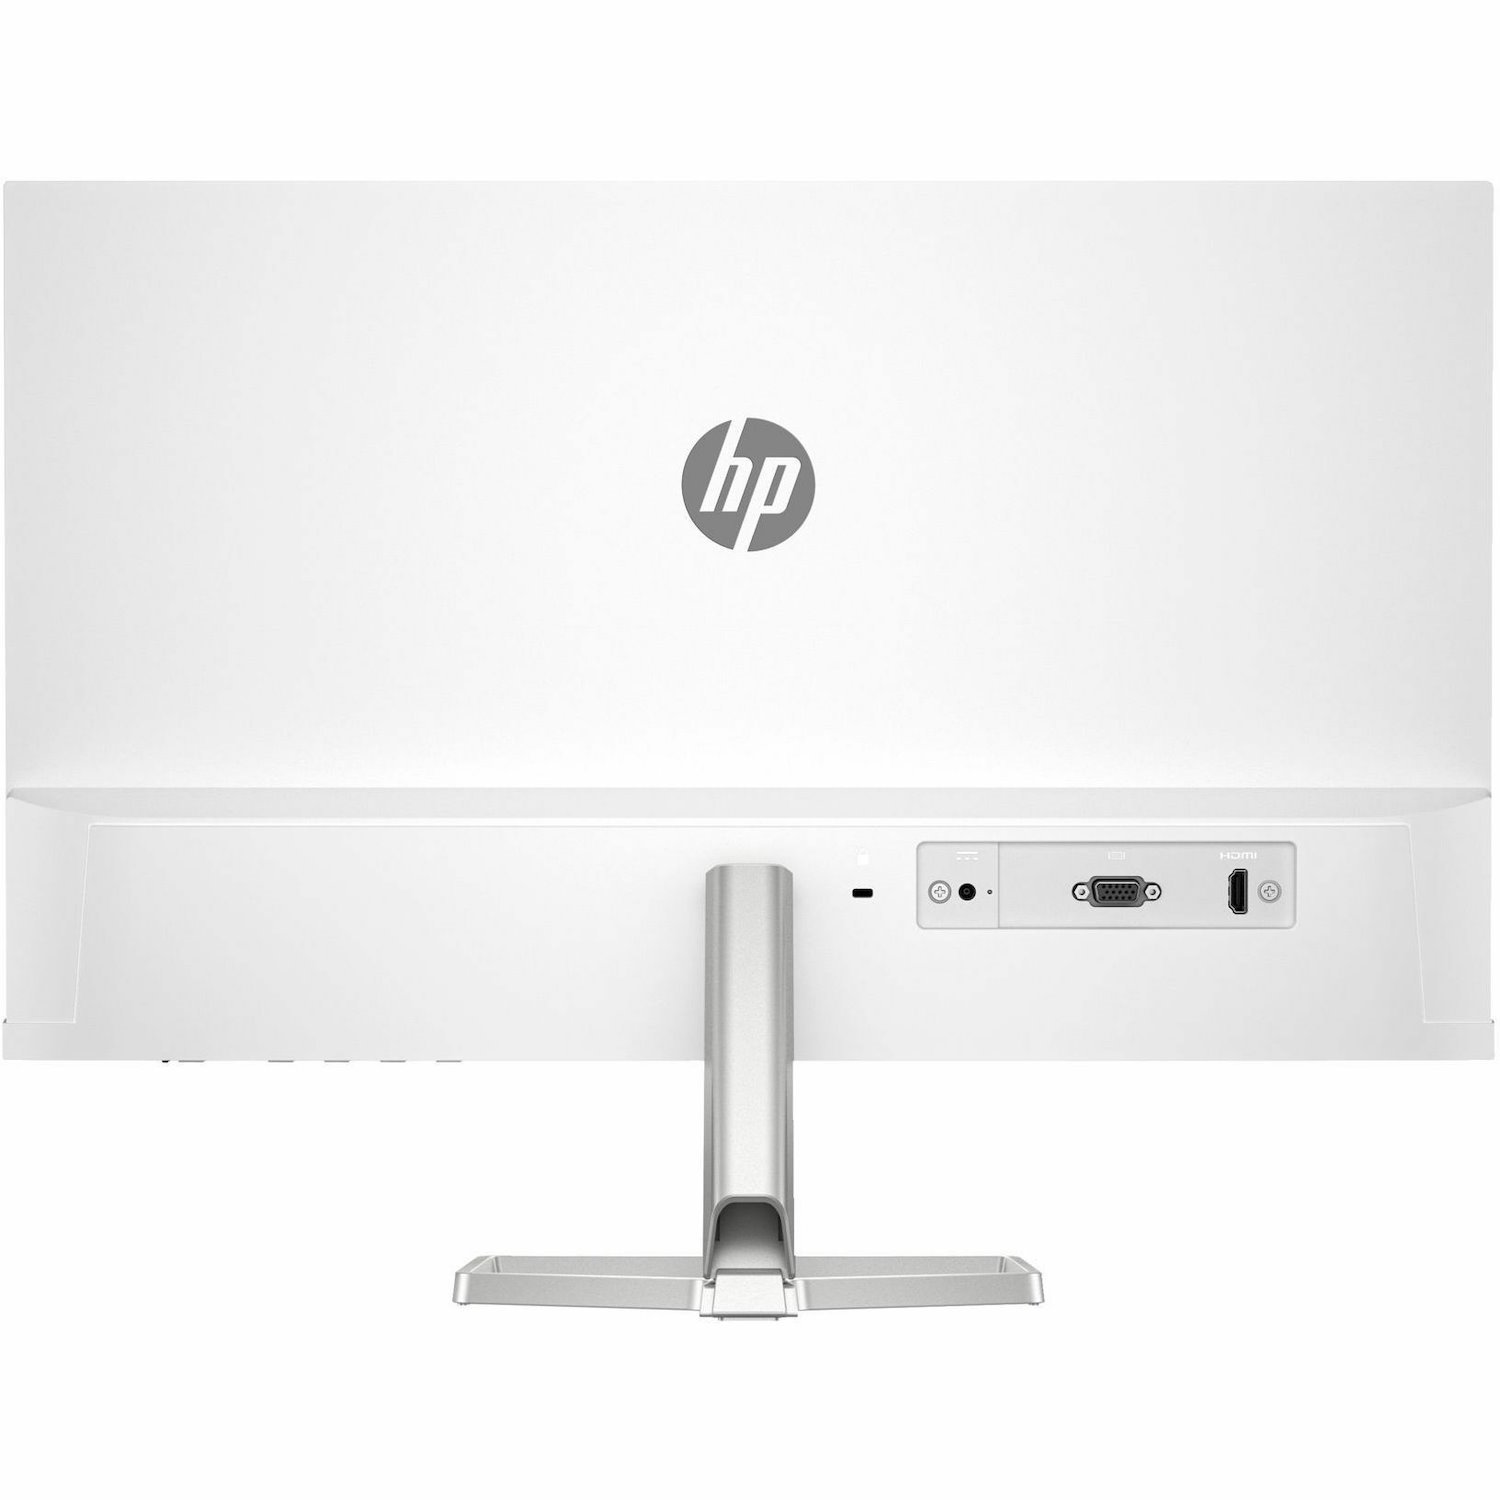 HP 524sw 24" Class Full HD LED Monitor - 16:9 - White